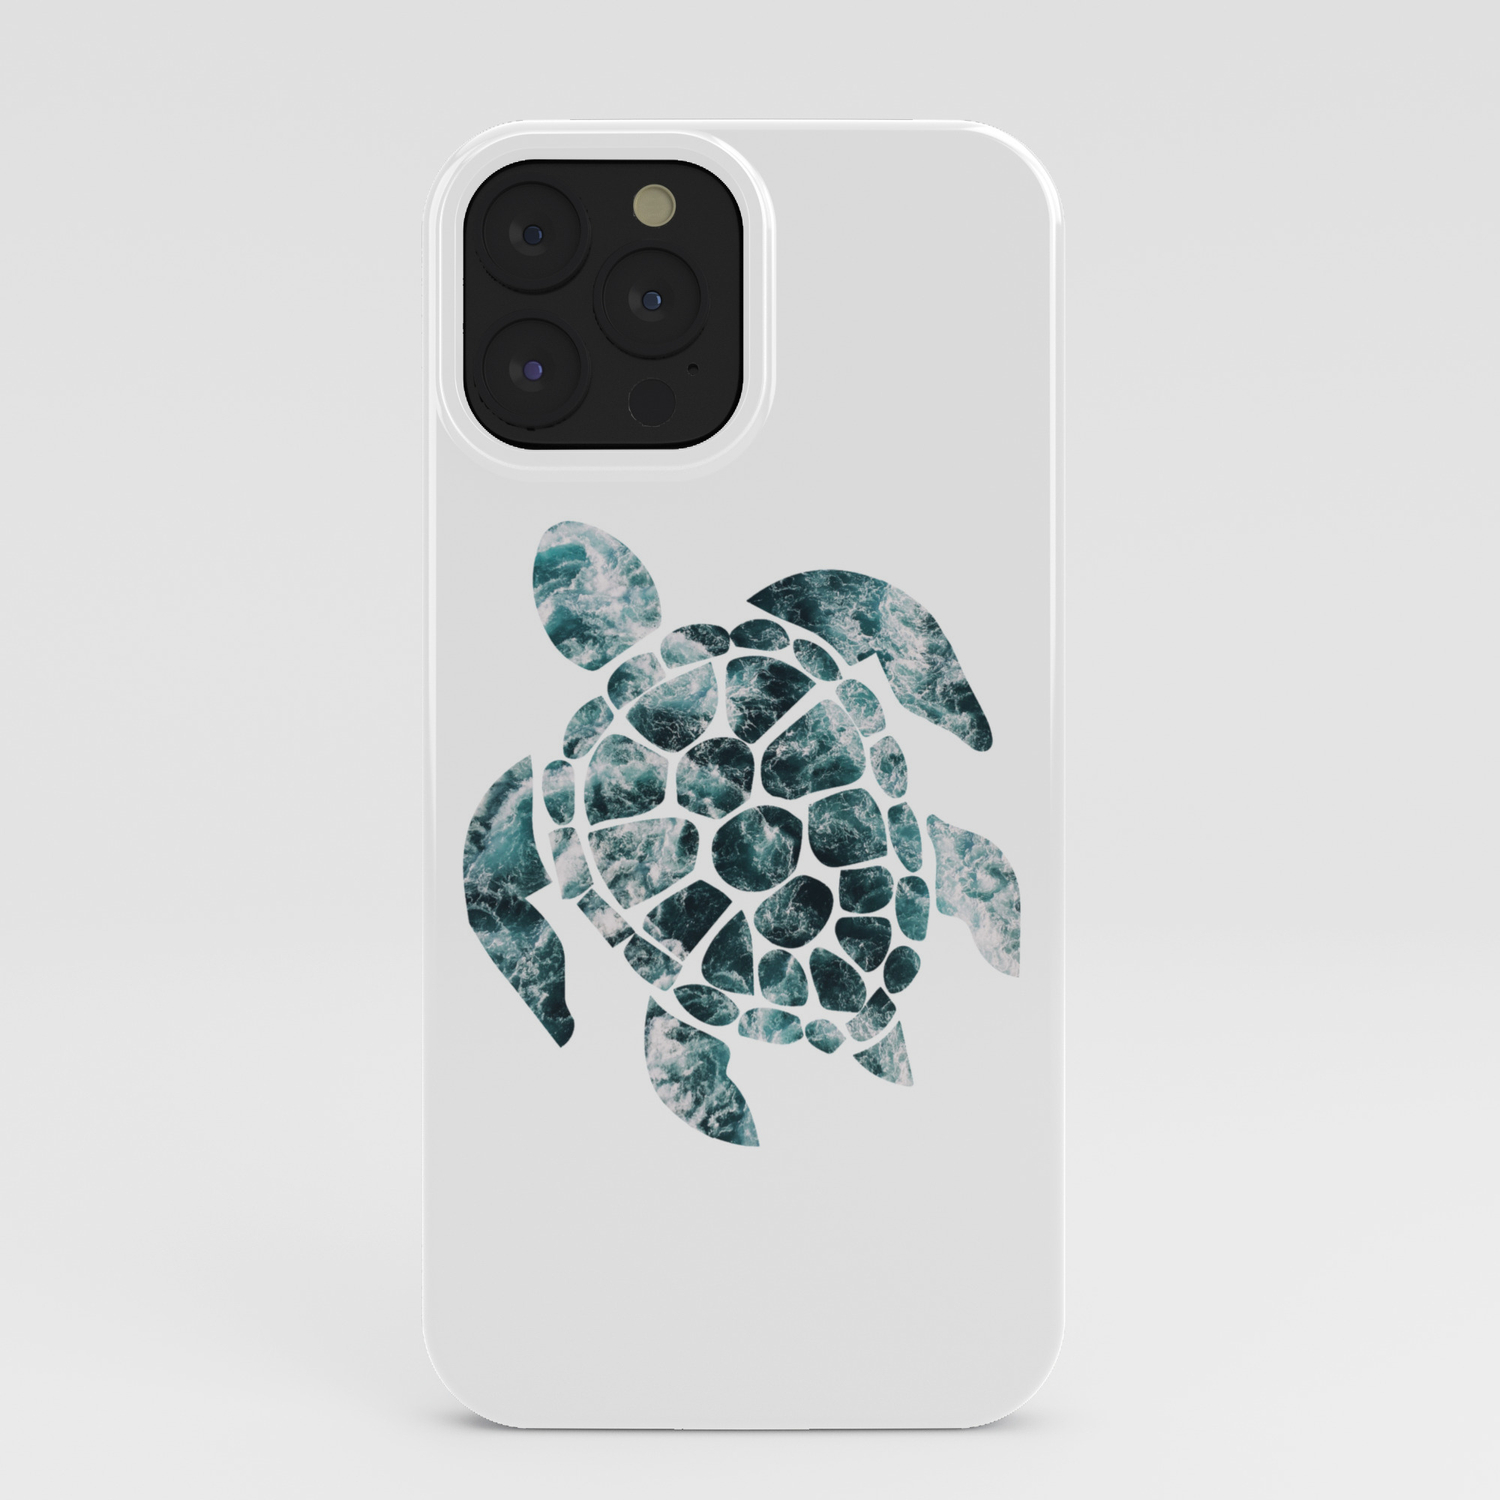 Sea Turtle - Turquoise Ocean Waves iPhone Case